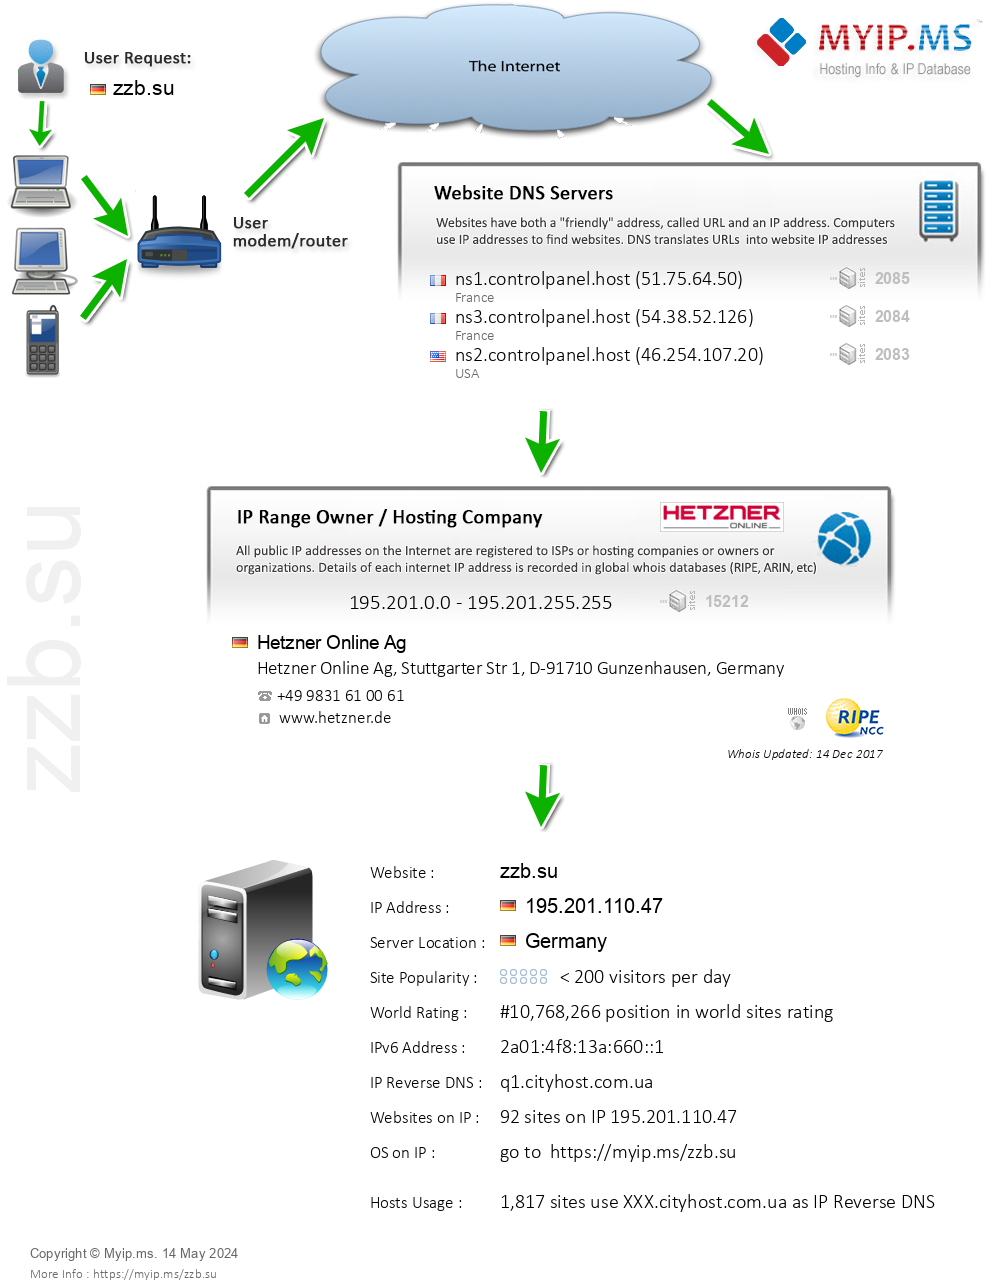 Zzb.su - Website Hosting Visual IP Diagram